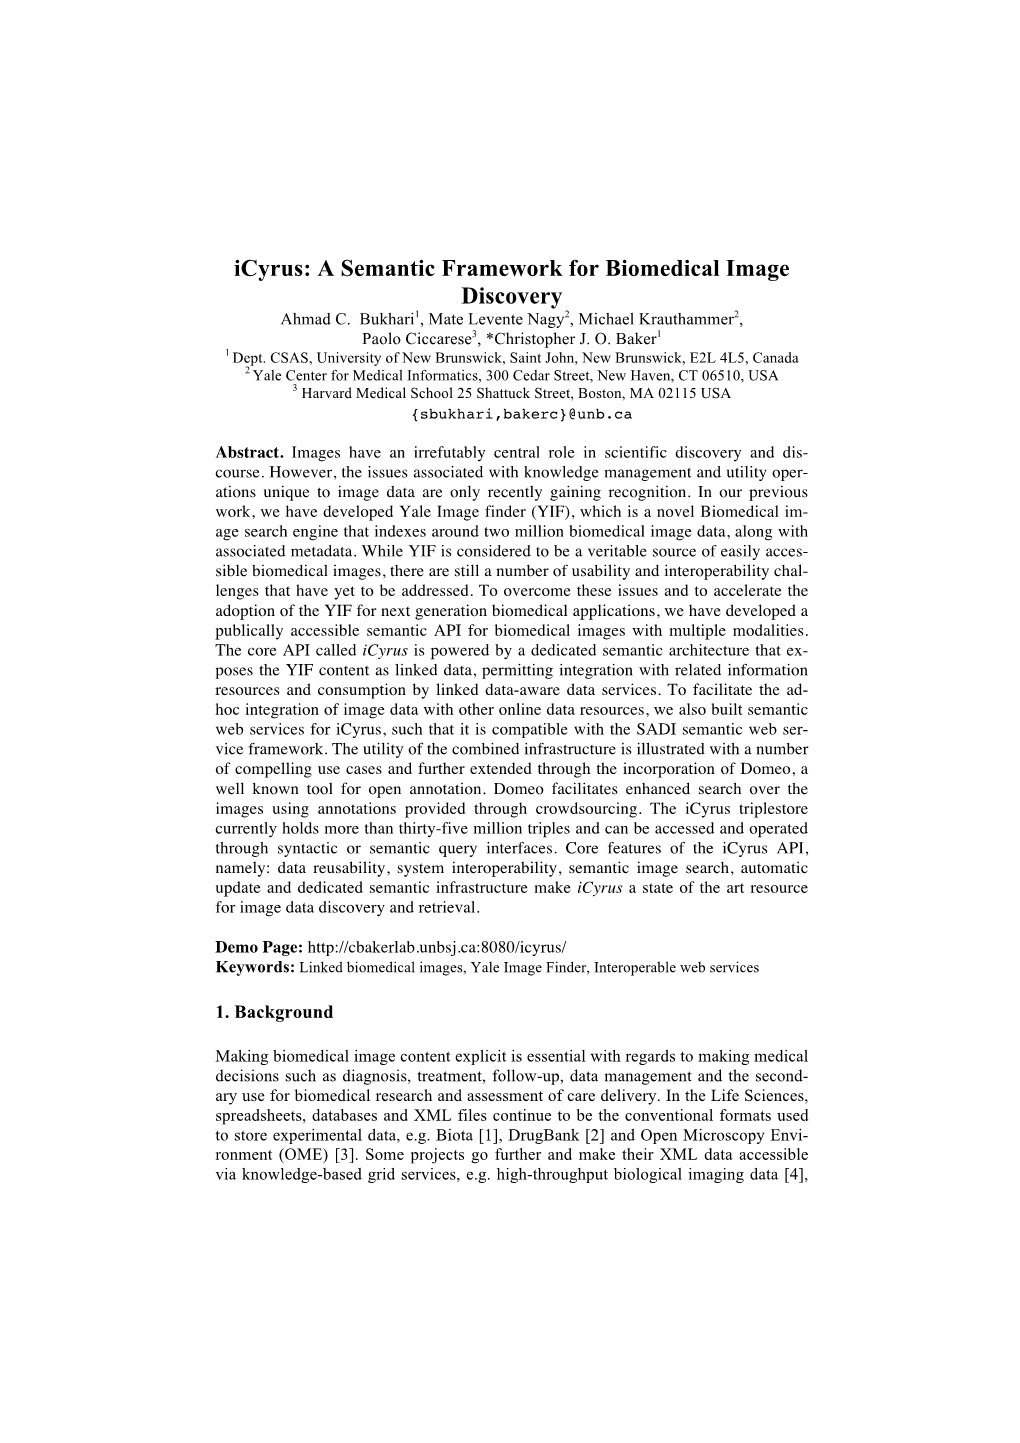 A Semantic Framework for Biomedical Image Discovery Ahmad C